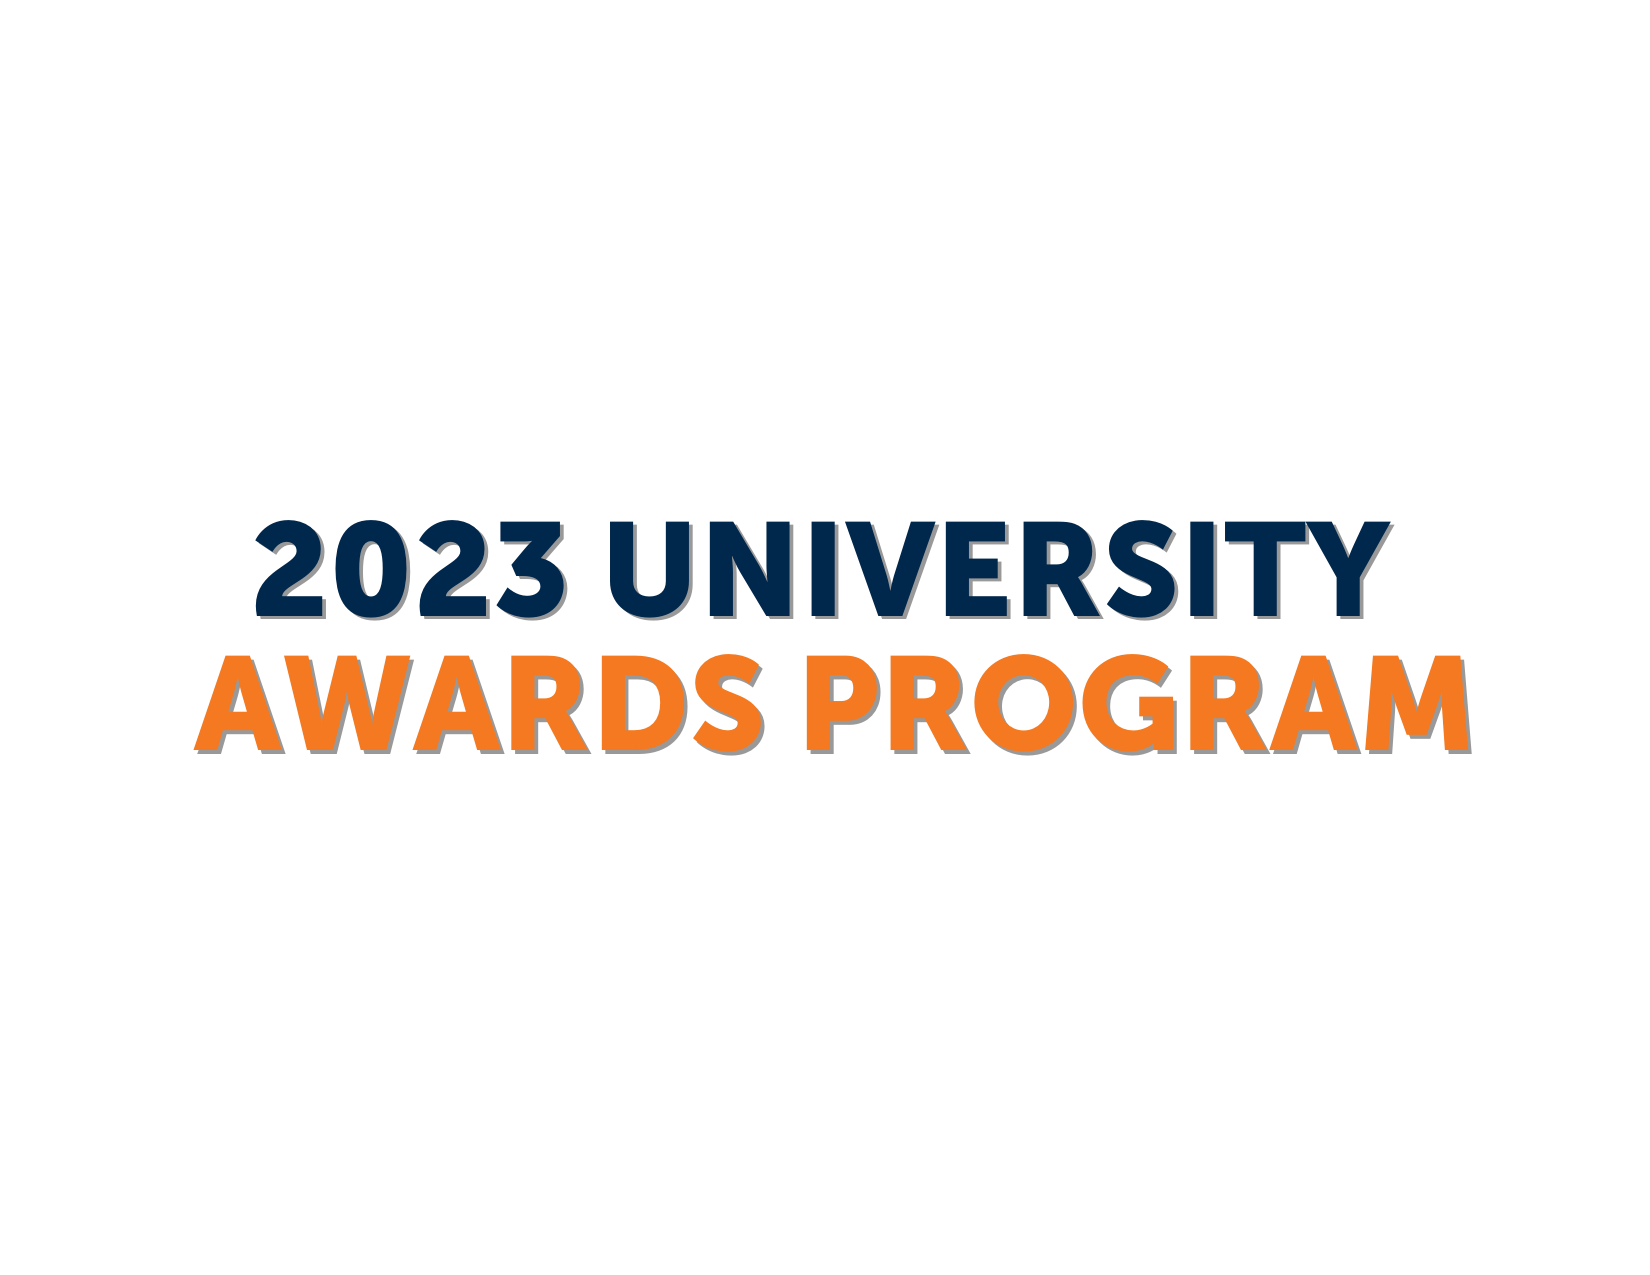 University Awards Program 2023